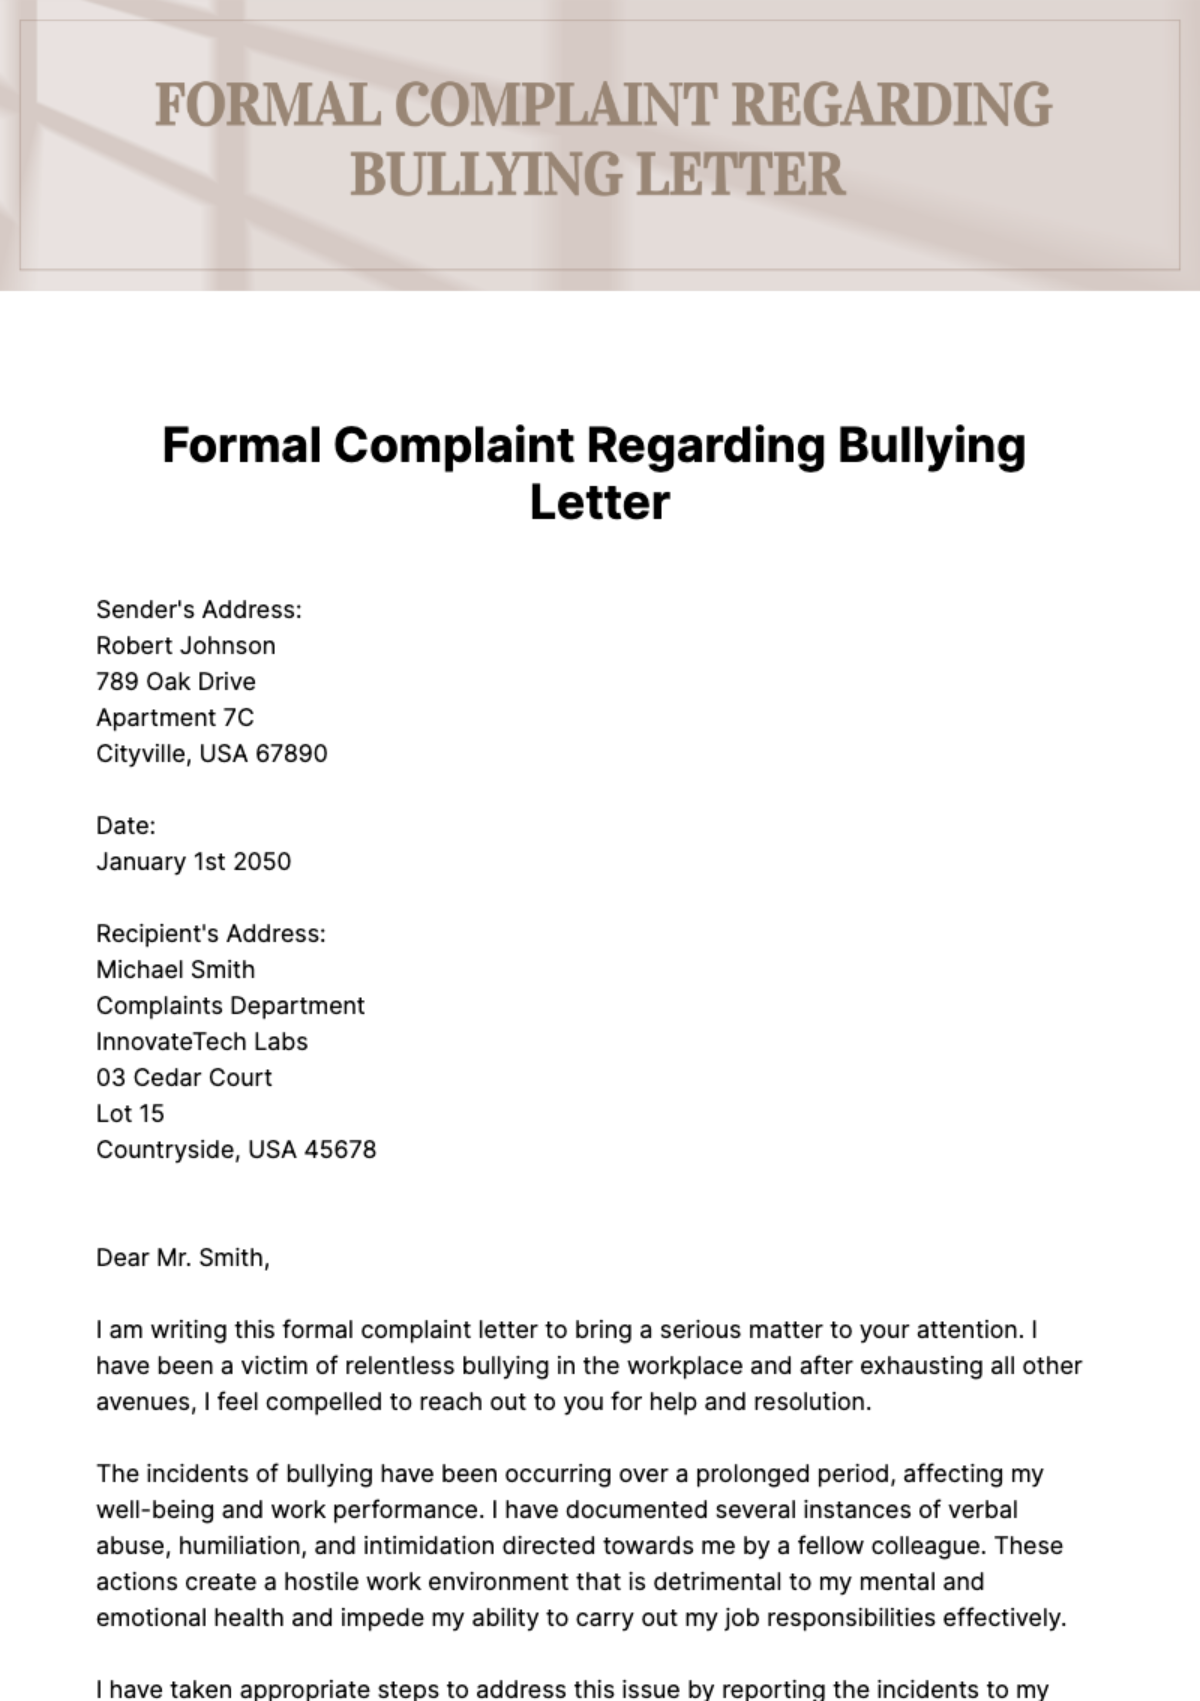 Free Formal Complaint Regarding Bullying Letter Template